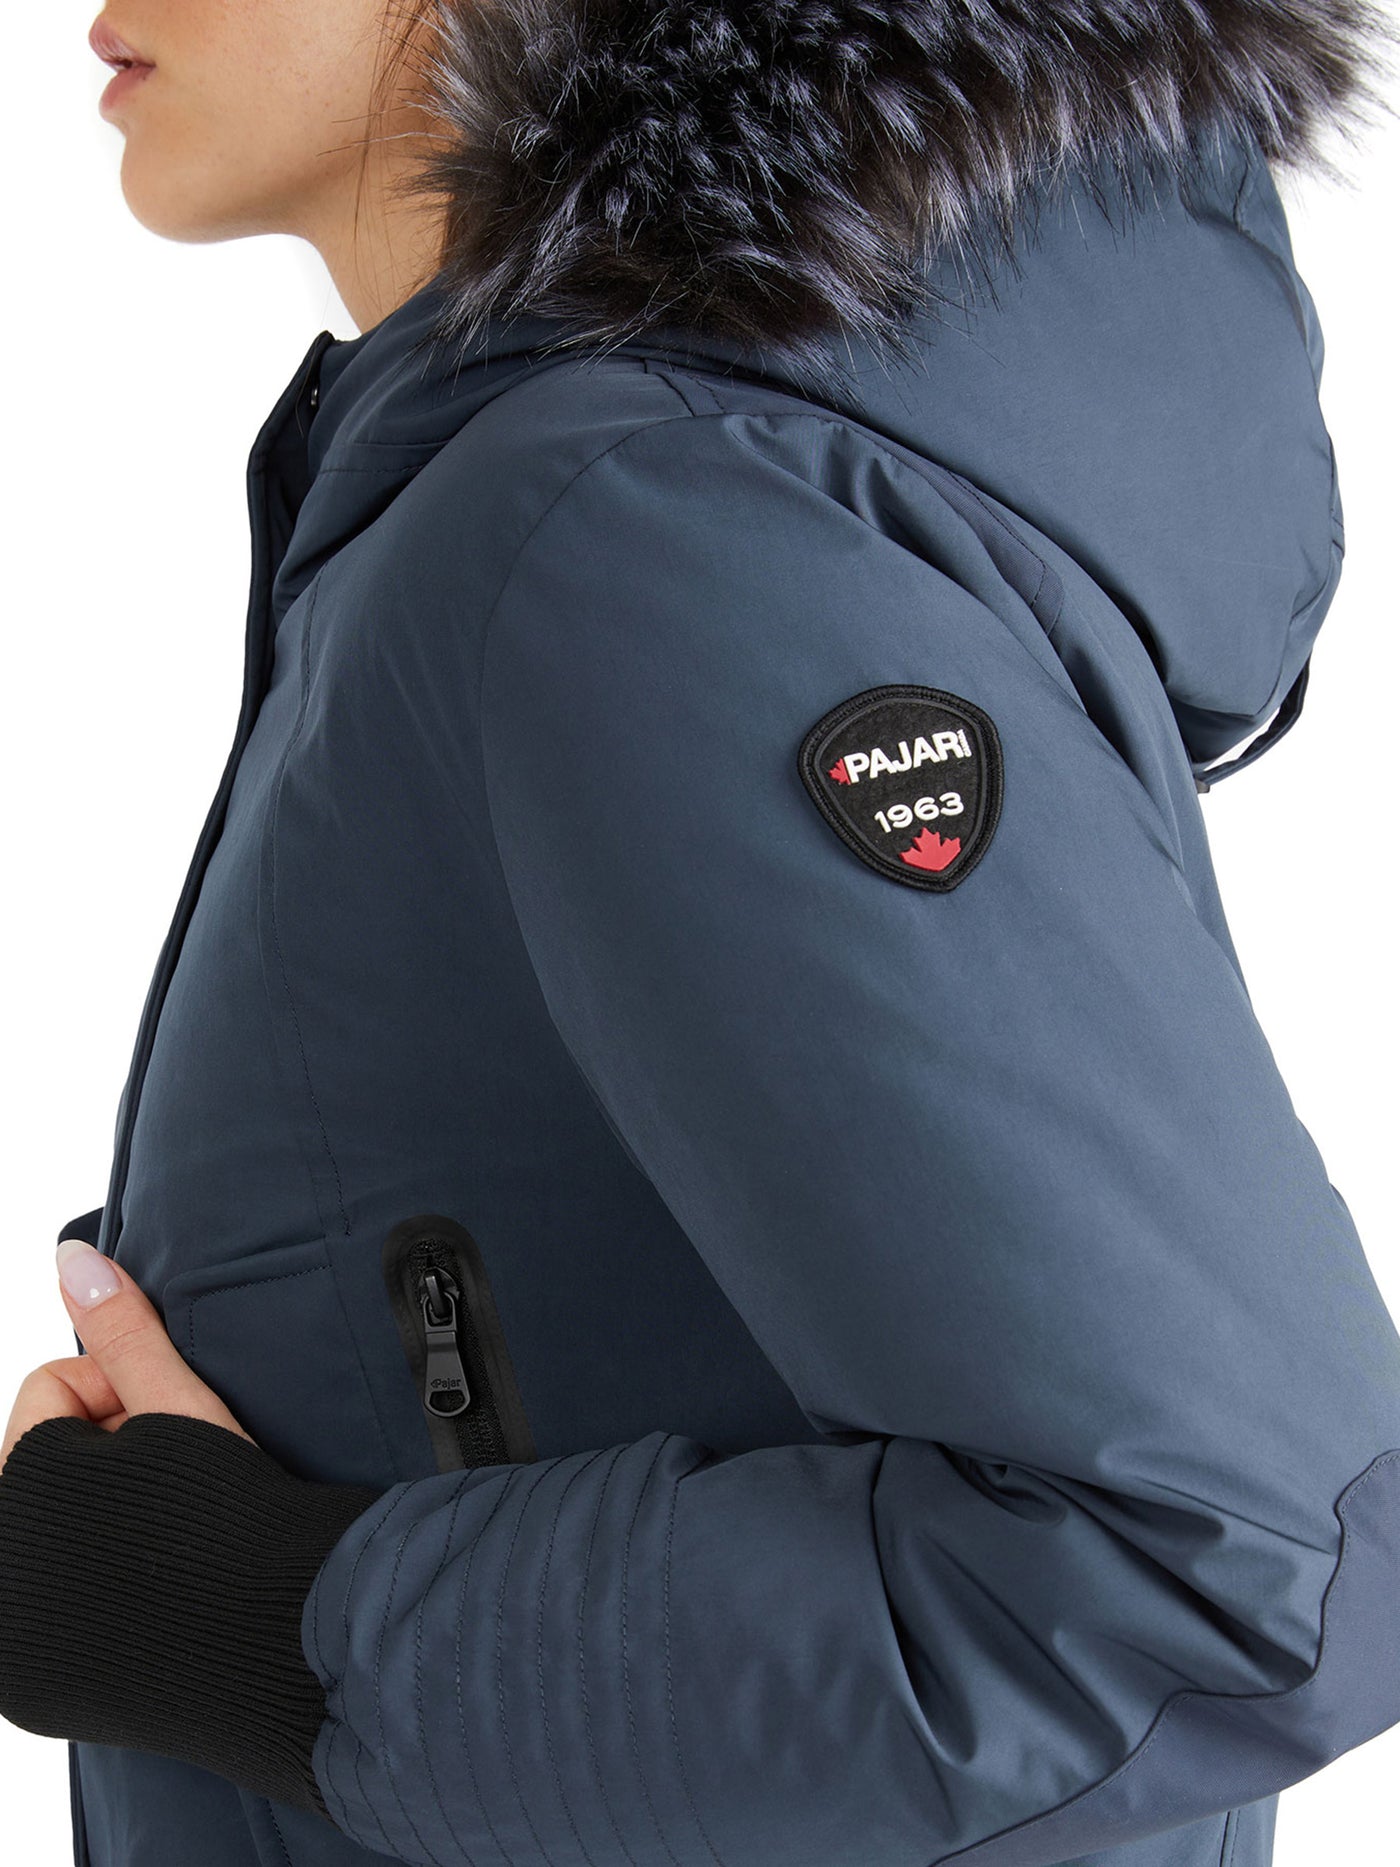 Cordova Women's Bomber Jacket w/ Faux Fur